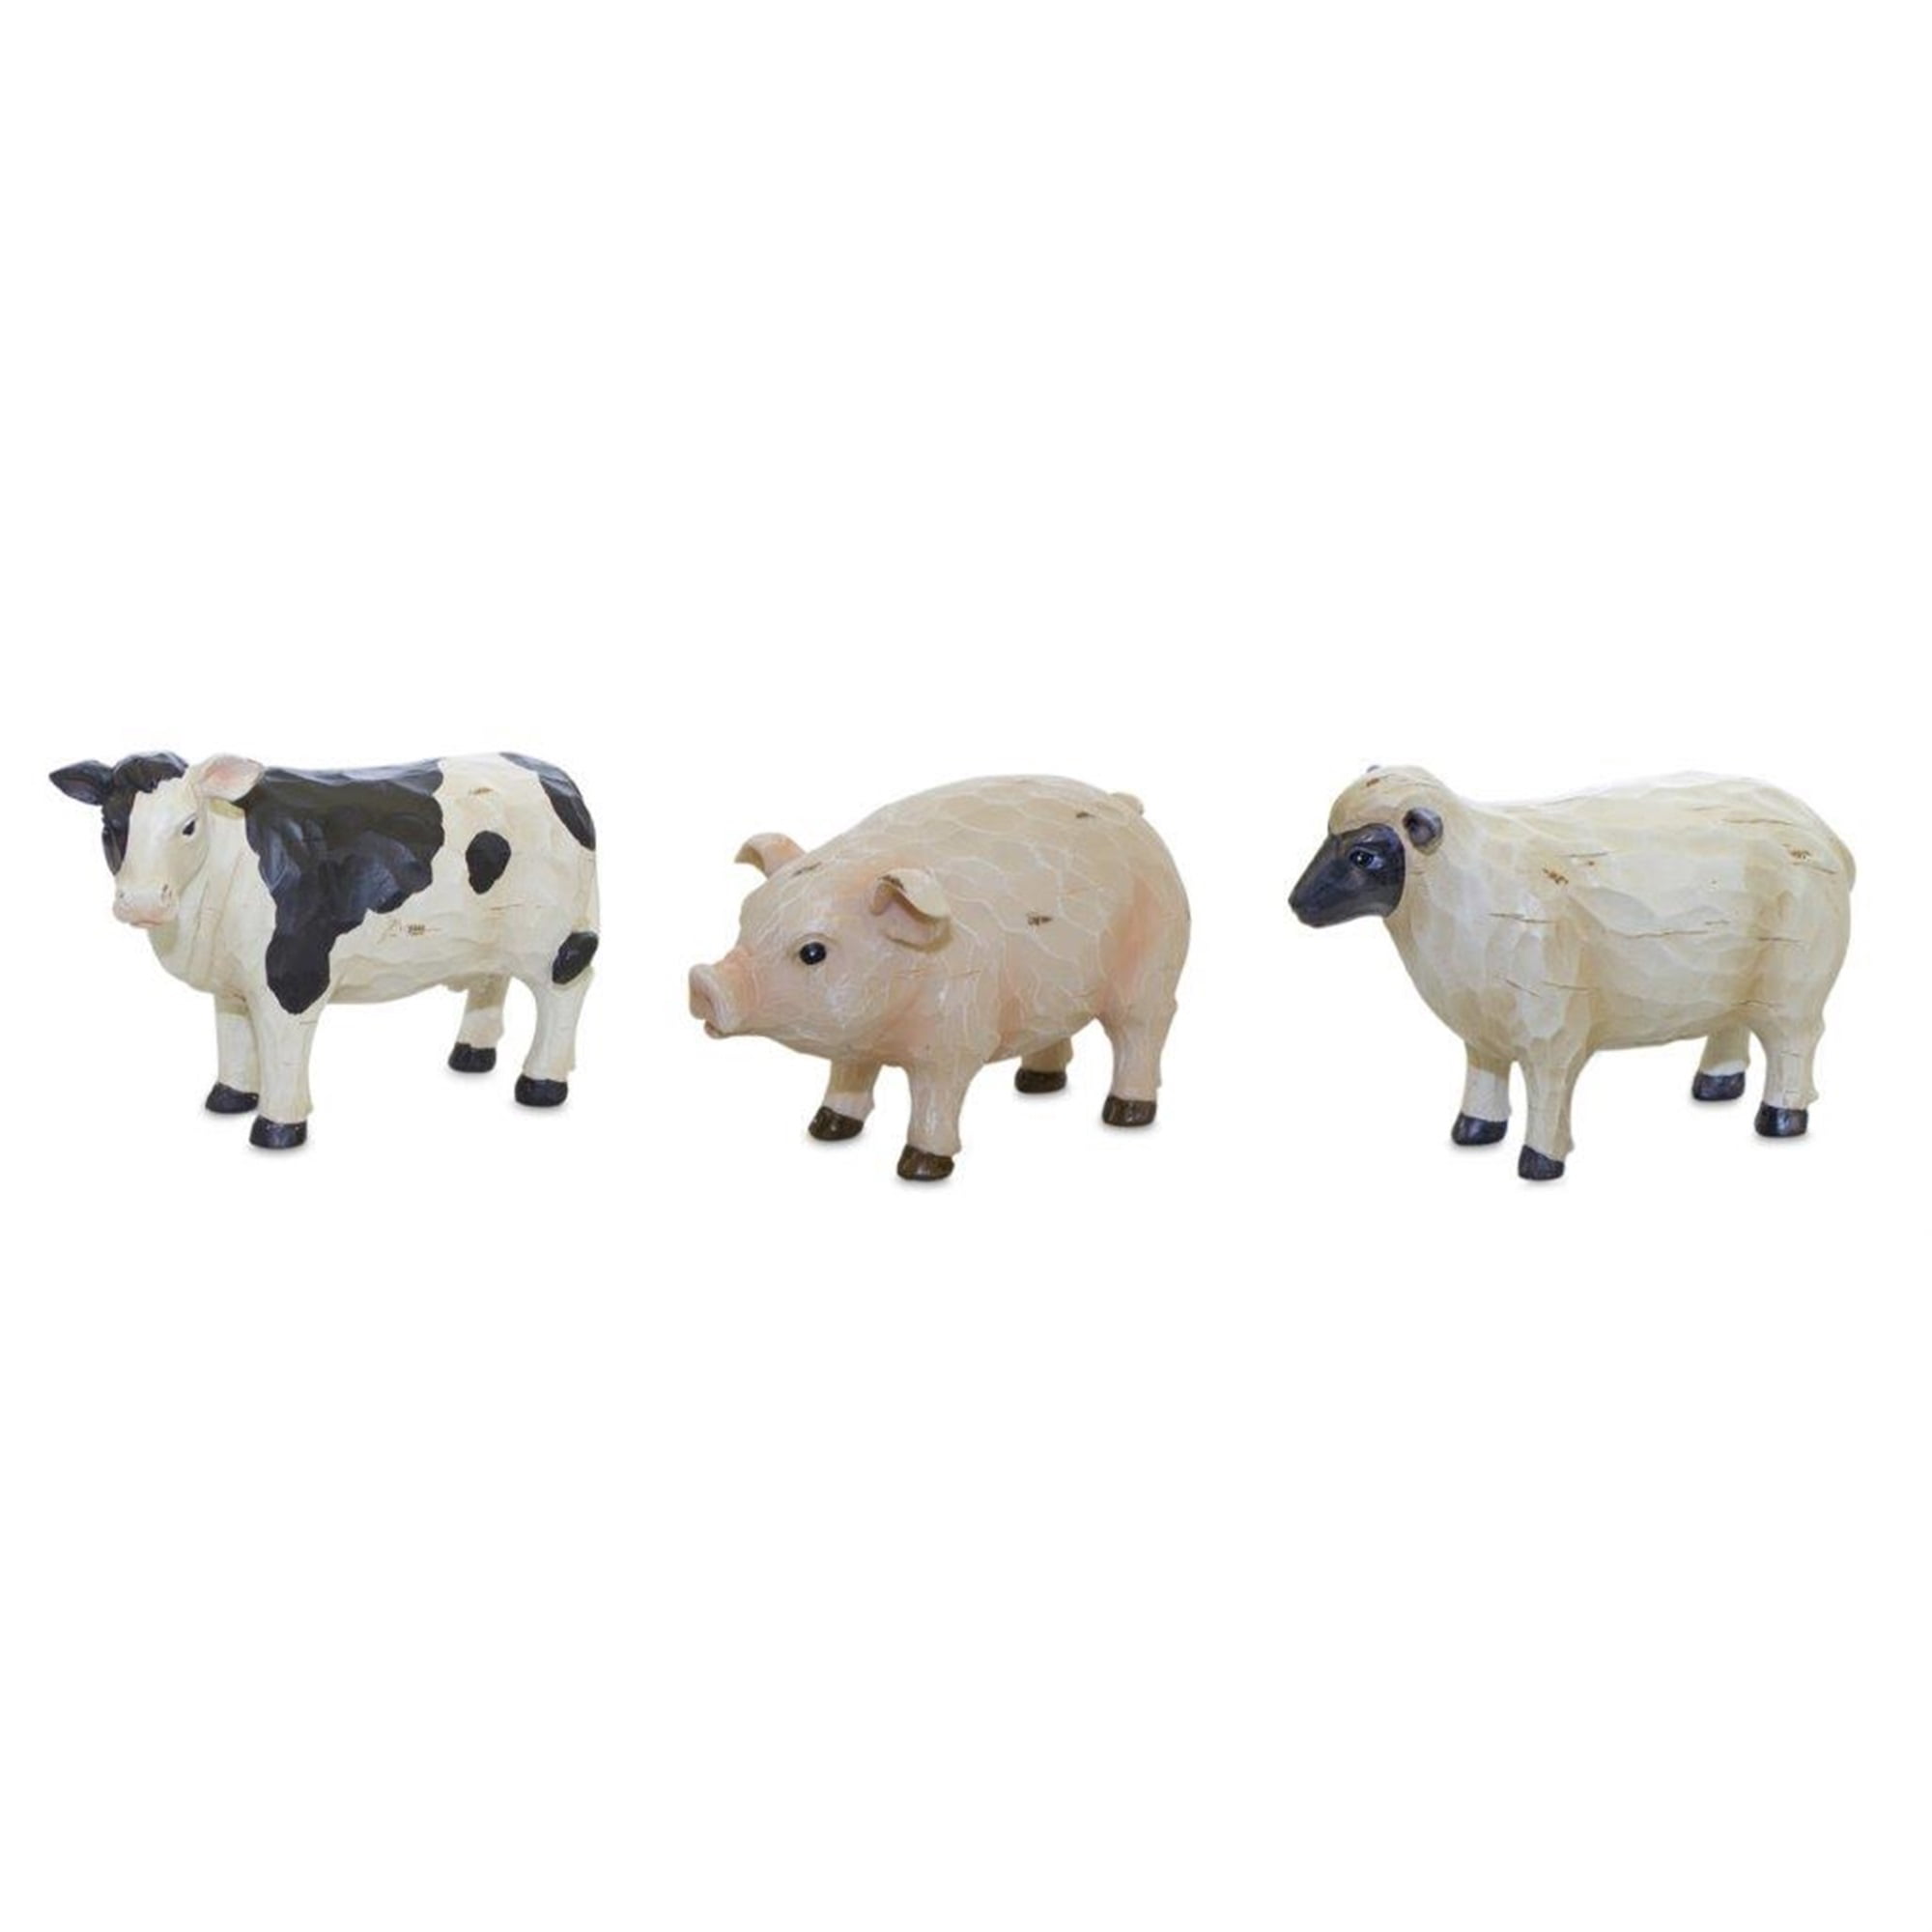 Sheep/Pig/Cow (Set of 3) 6"L x 3.75"H Resin